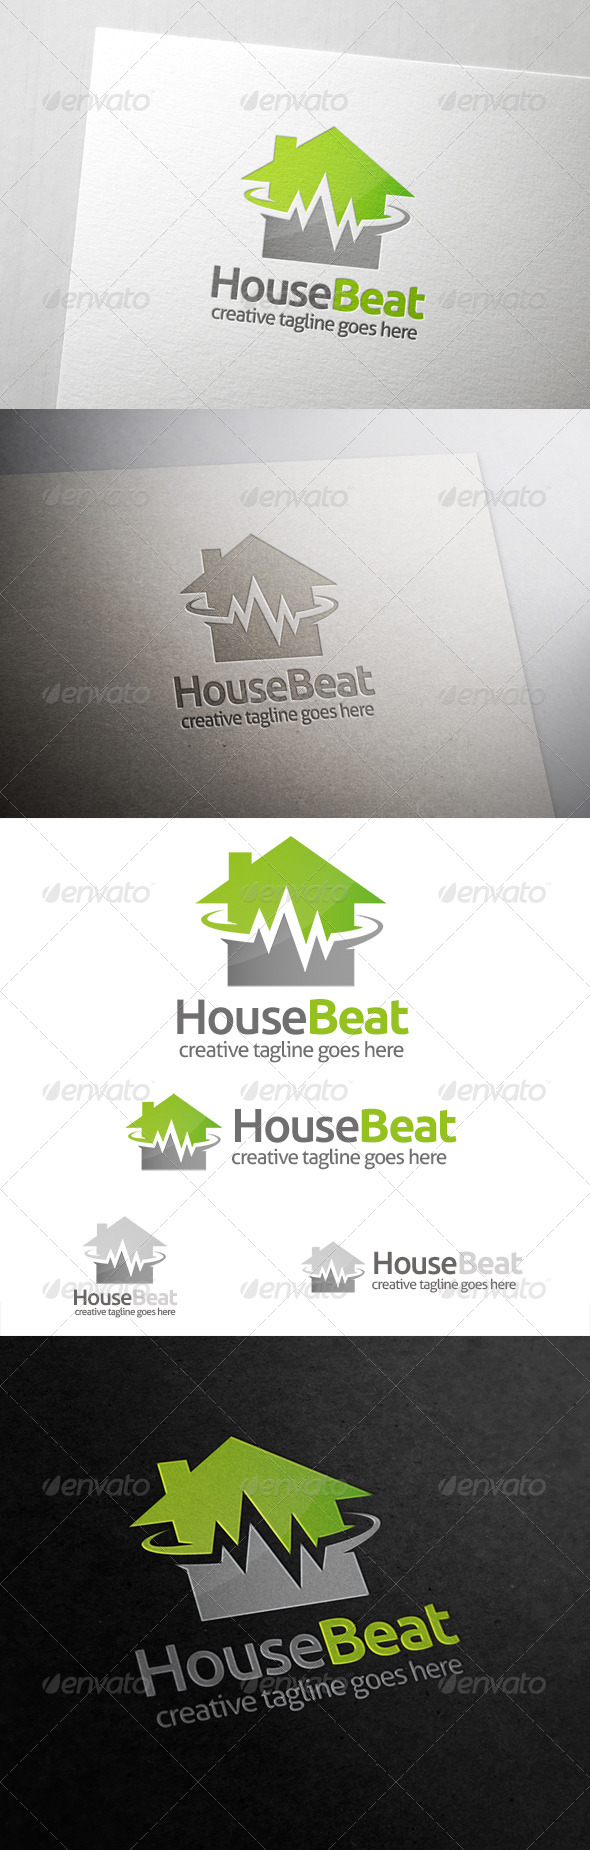 House Beat Logo